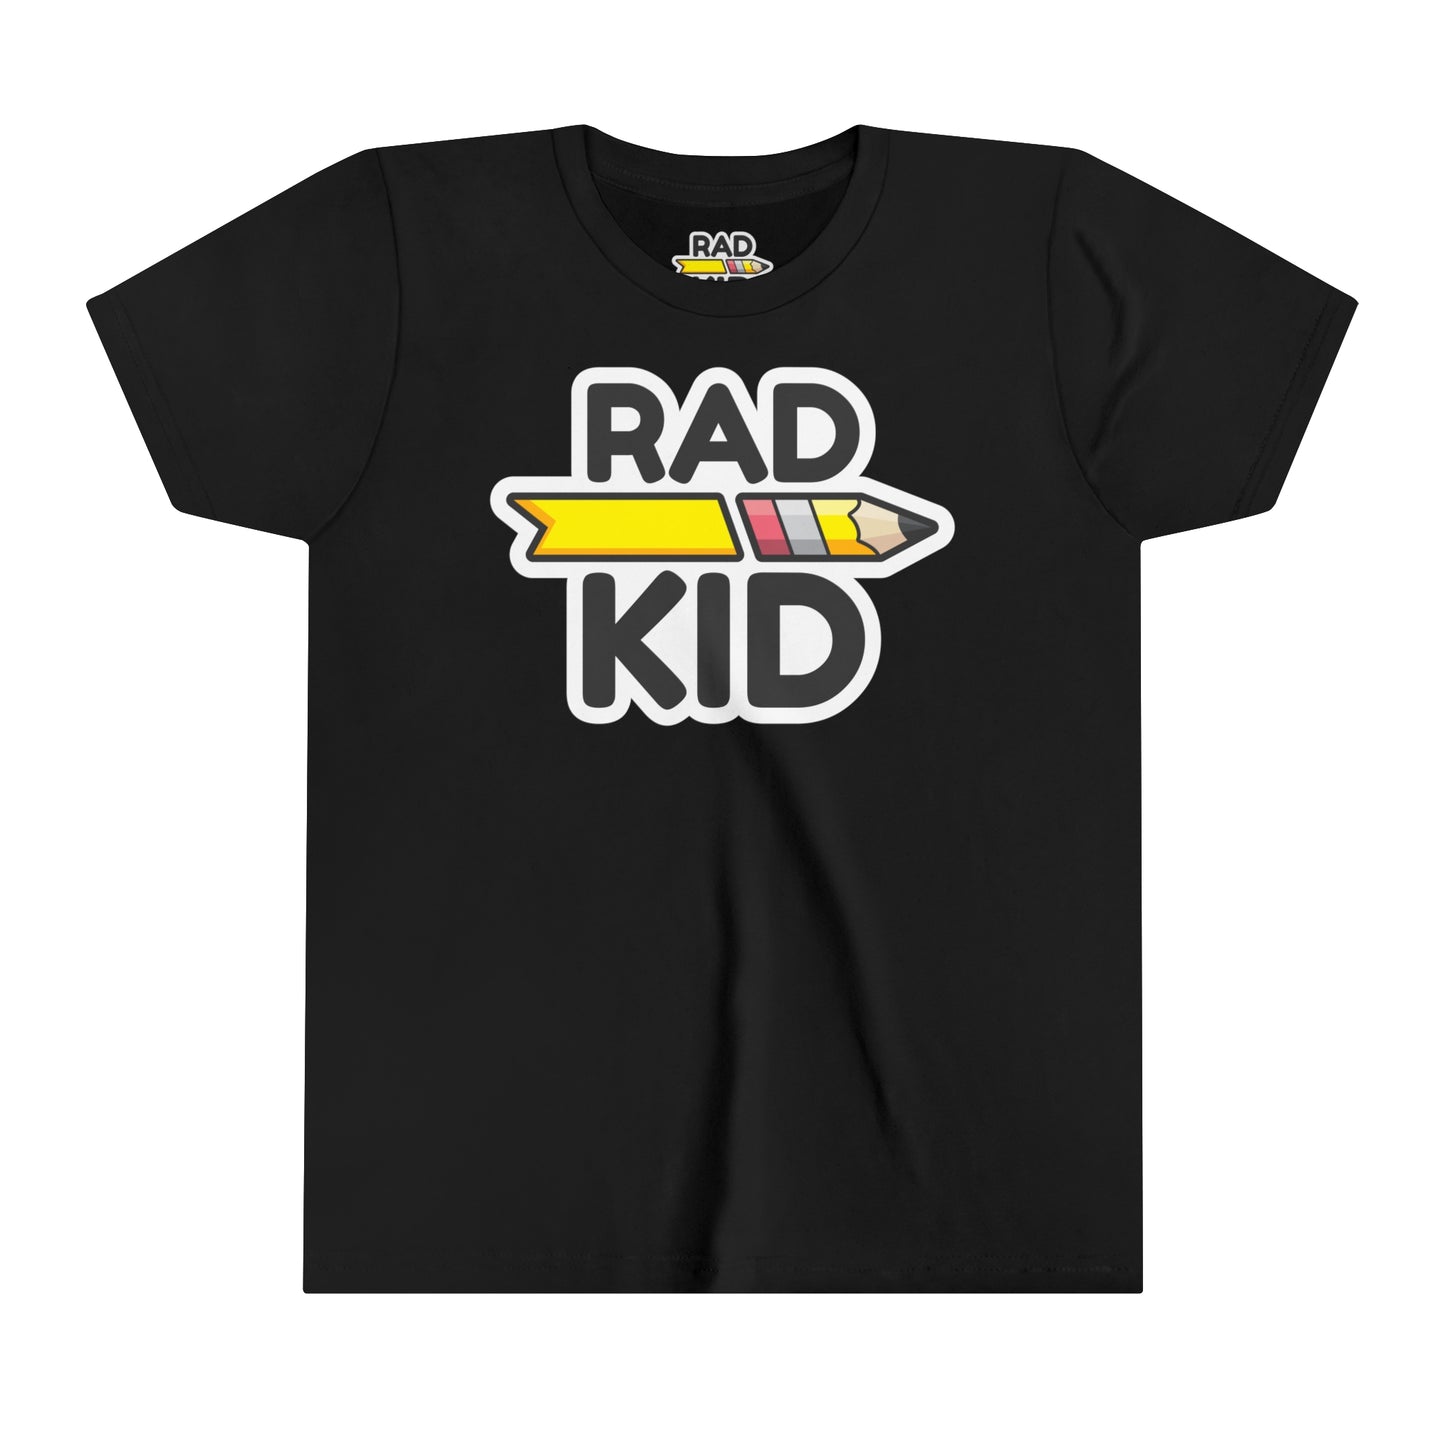 "RAD KID" SQUAD Youth Short Sleeve Tee Shirt